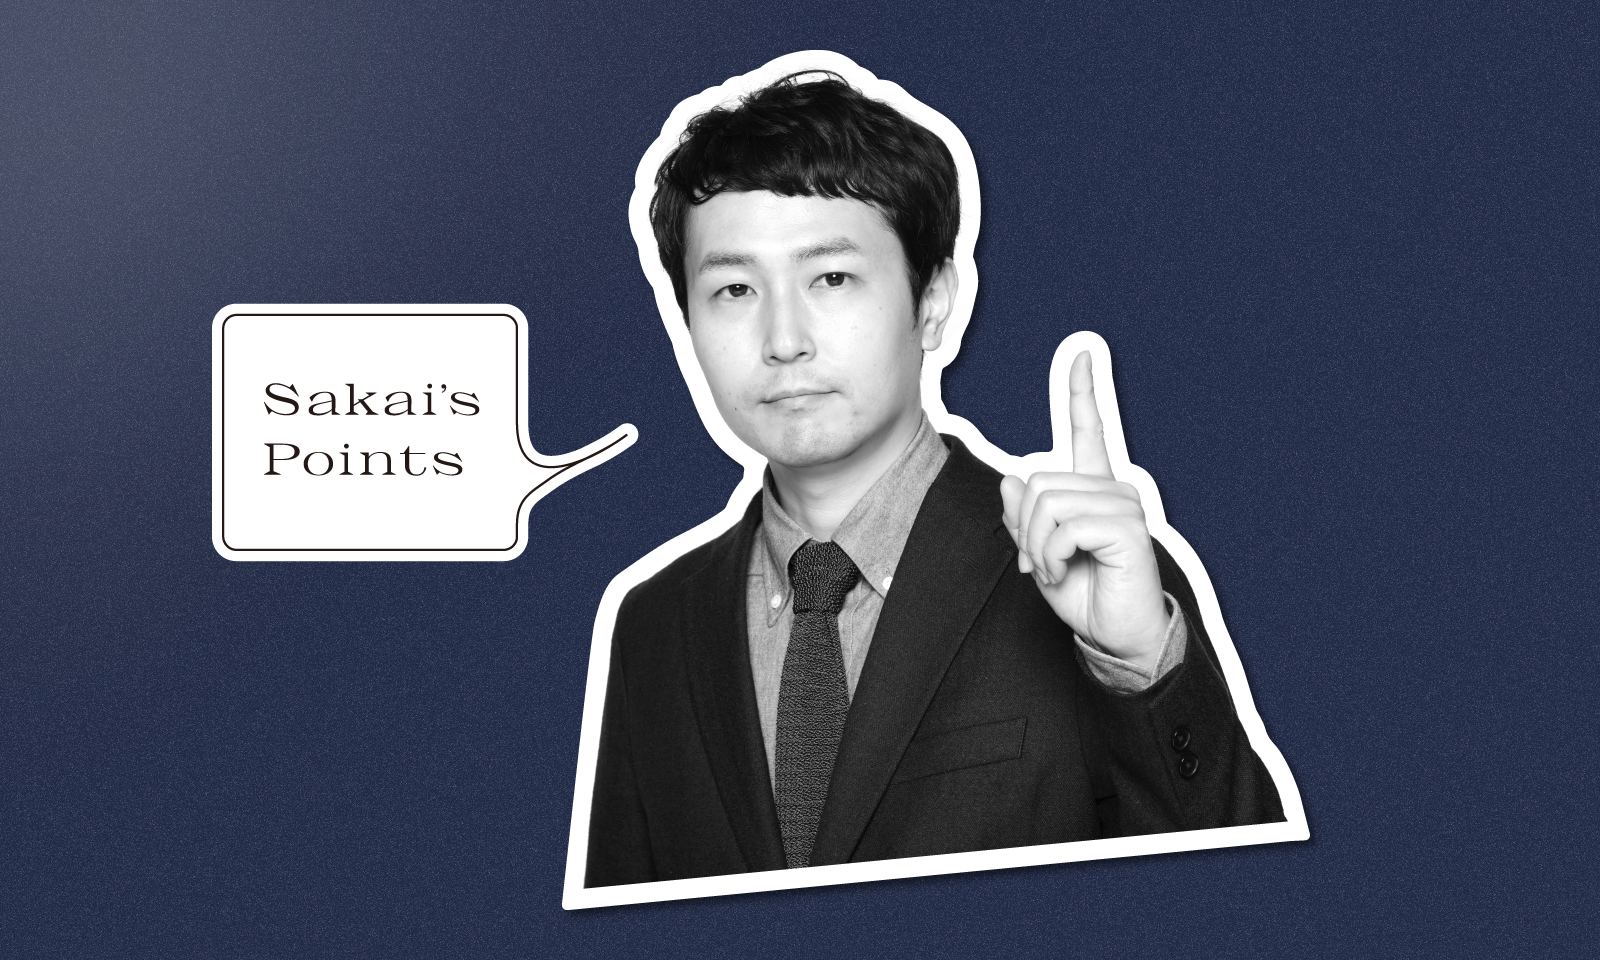 「Sakai's Points」とポーズを決める酒井氏の写真